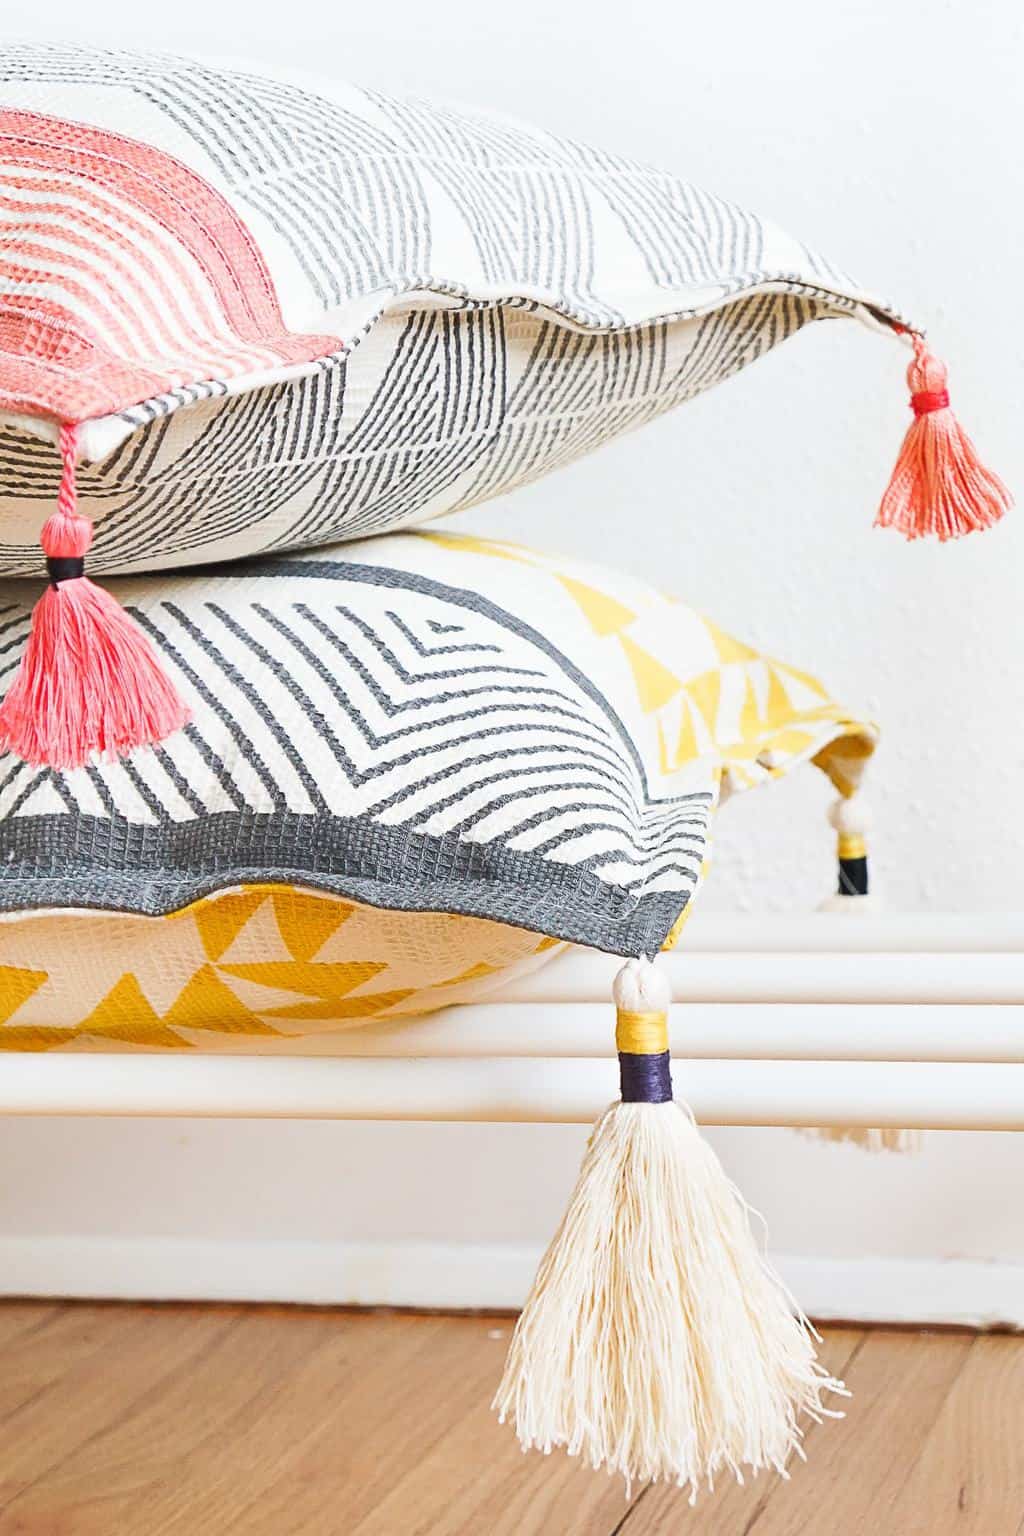 DIY Tasseled Throw Pillows by Ashley Rose of Sugar & Cloth, a top lifestyle blog in Houston, Texas